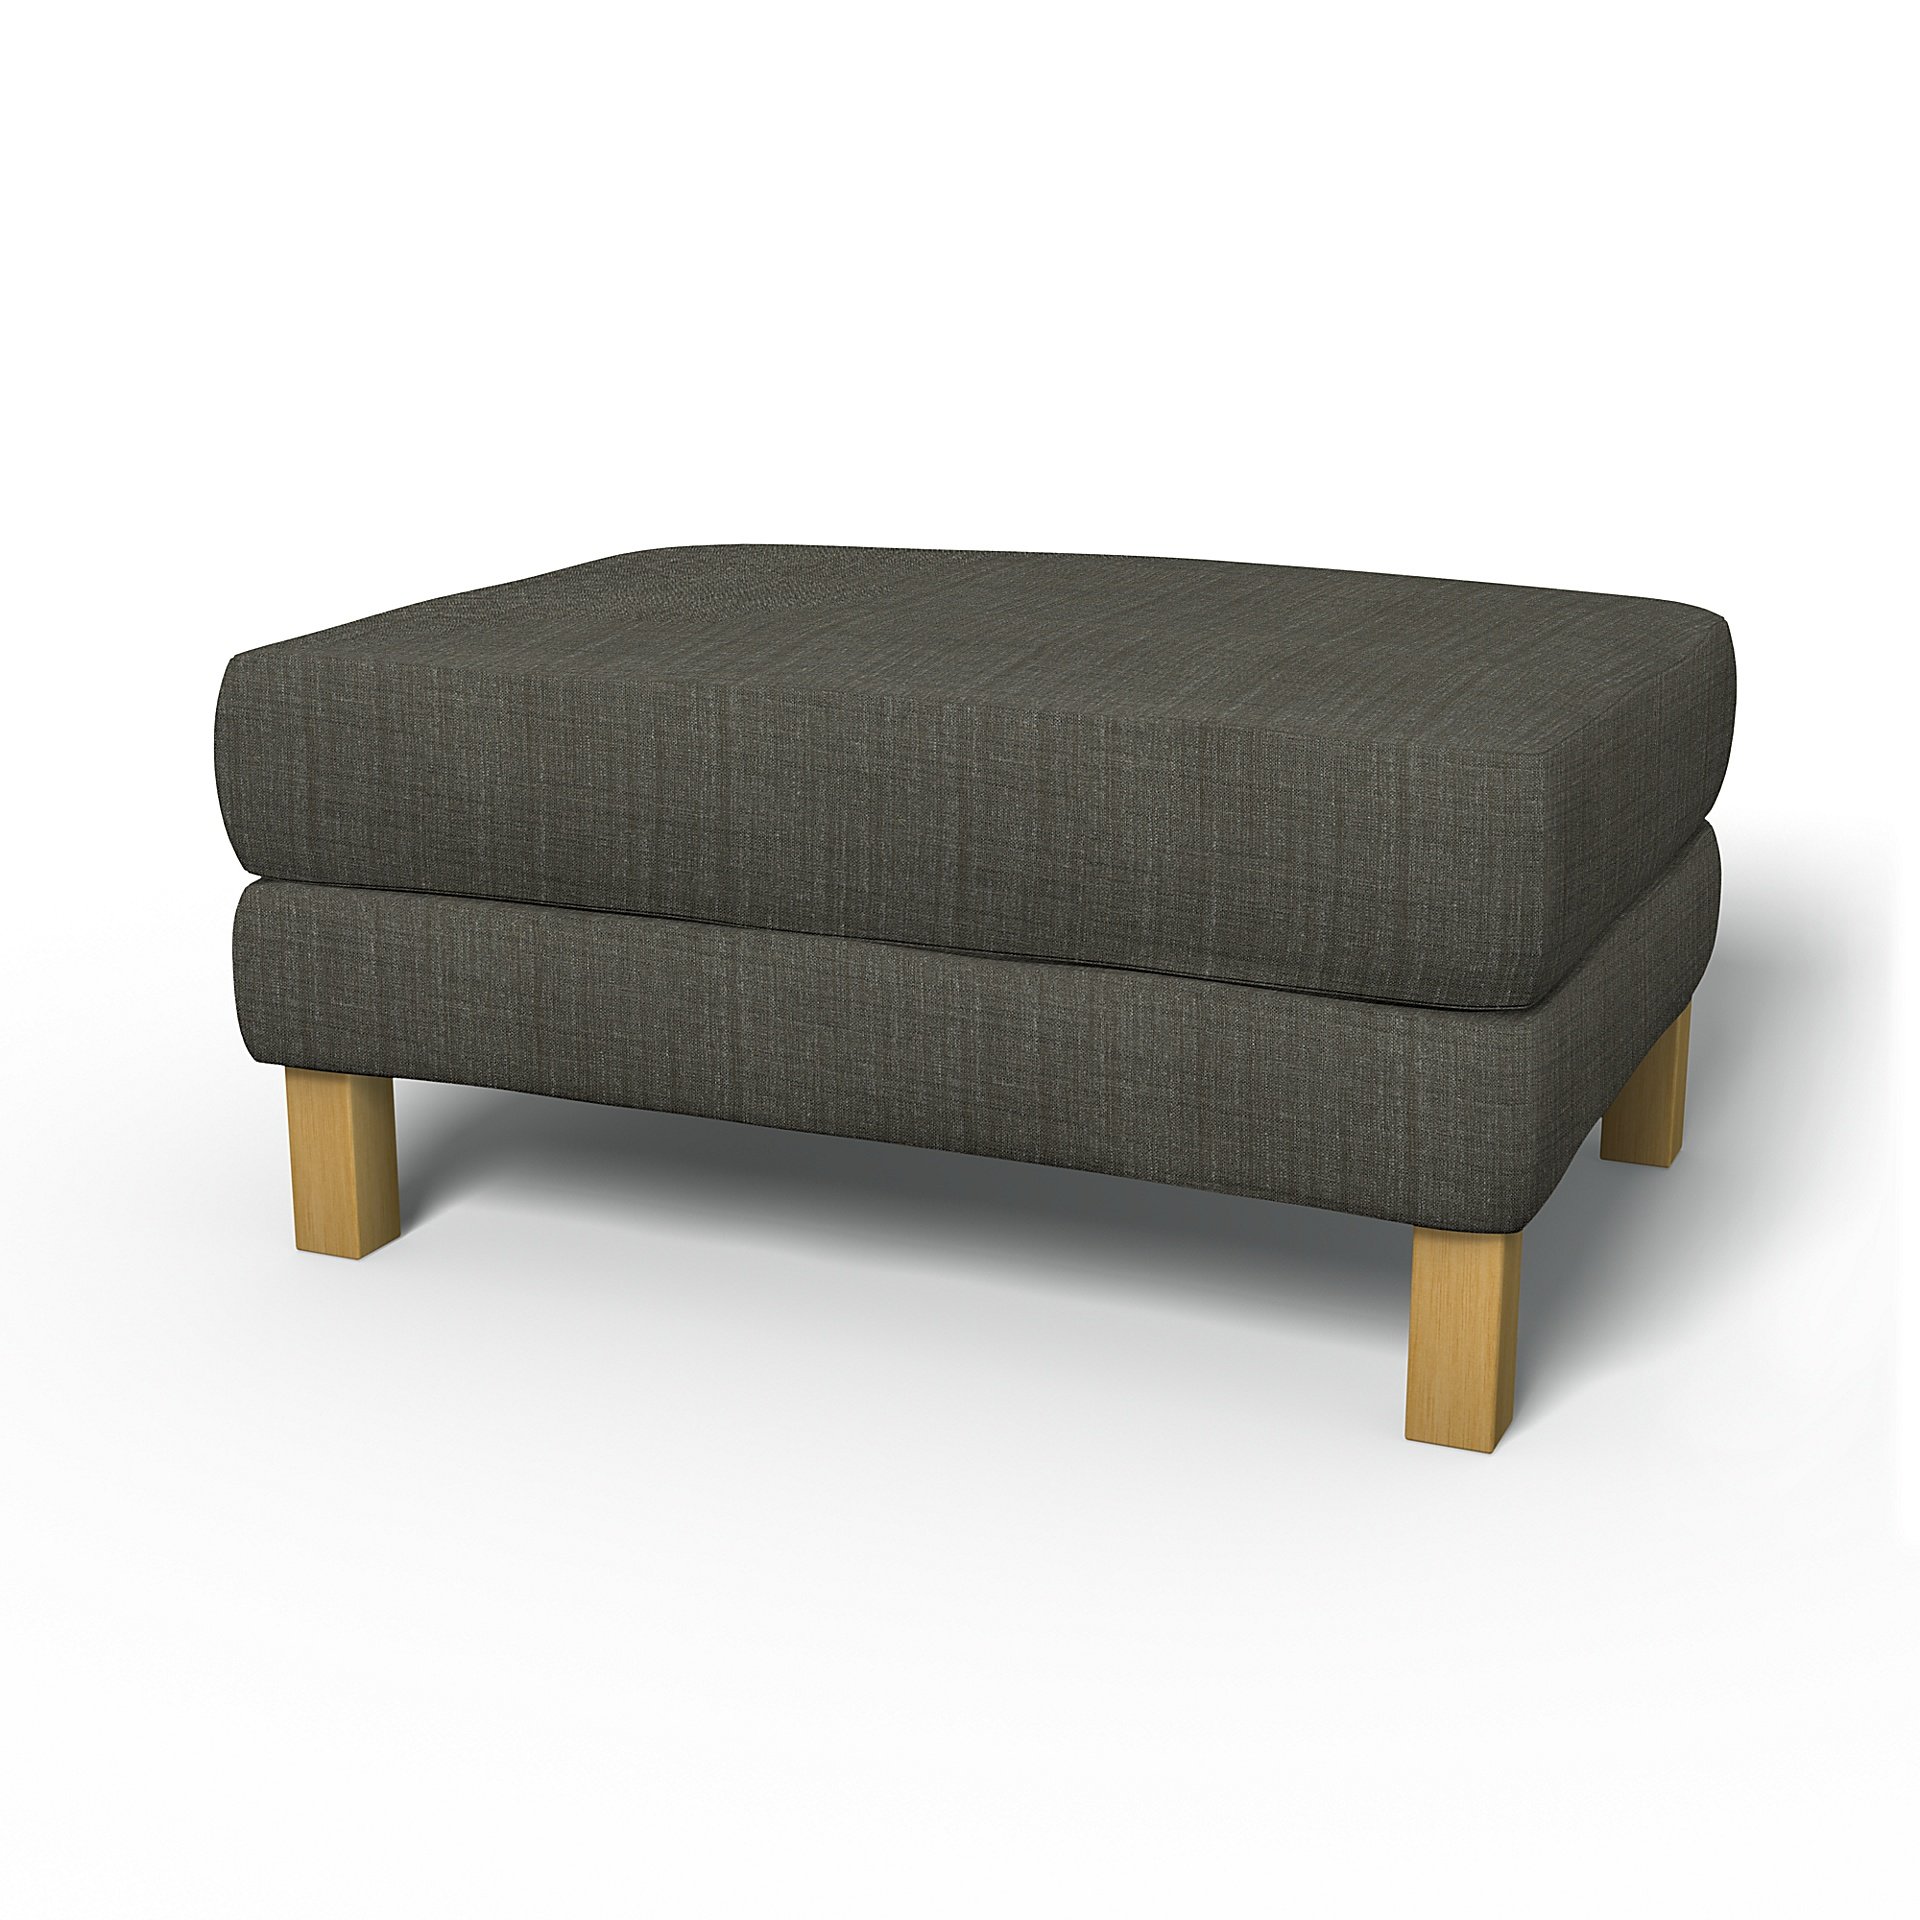 IKEA - Karlstad Footstool Cover, Mole Brown, Boucle & Texture - Bemz